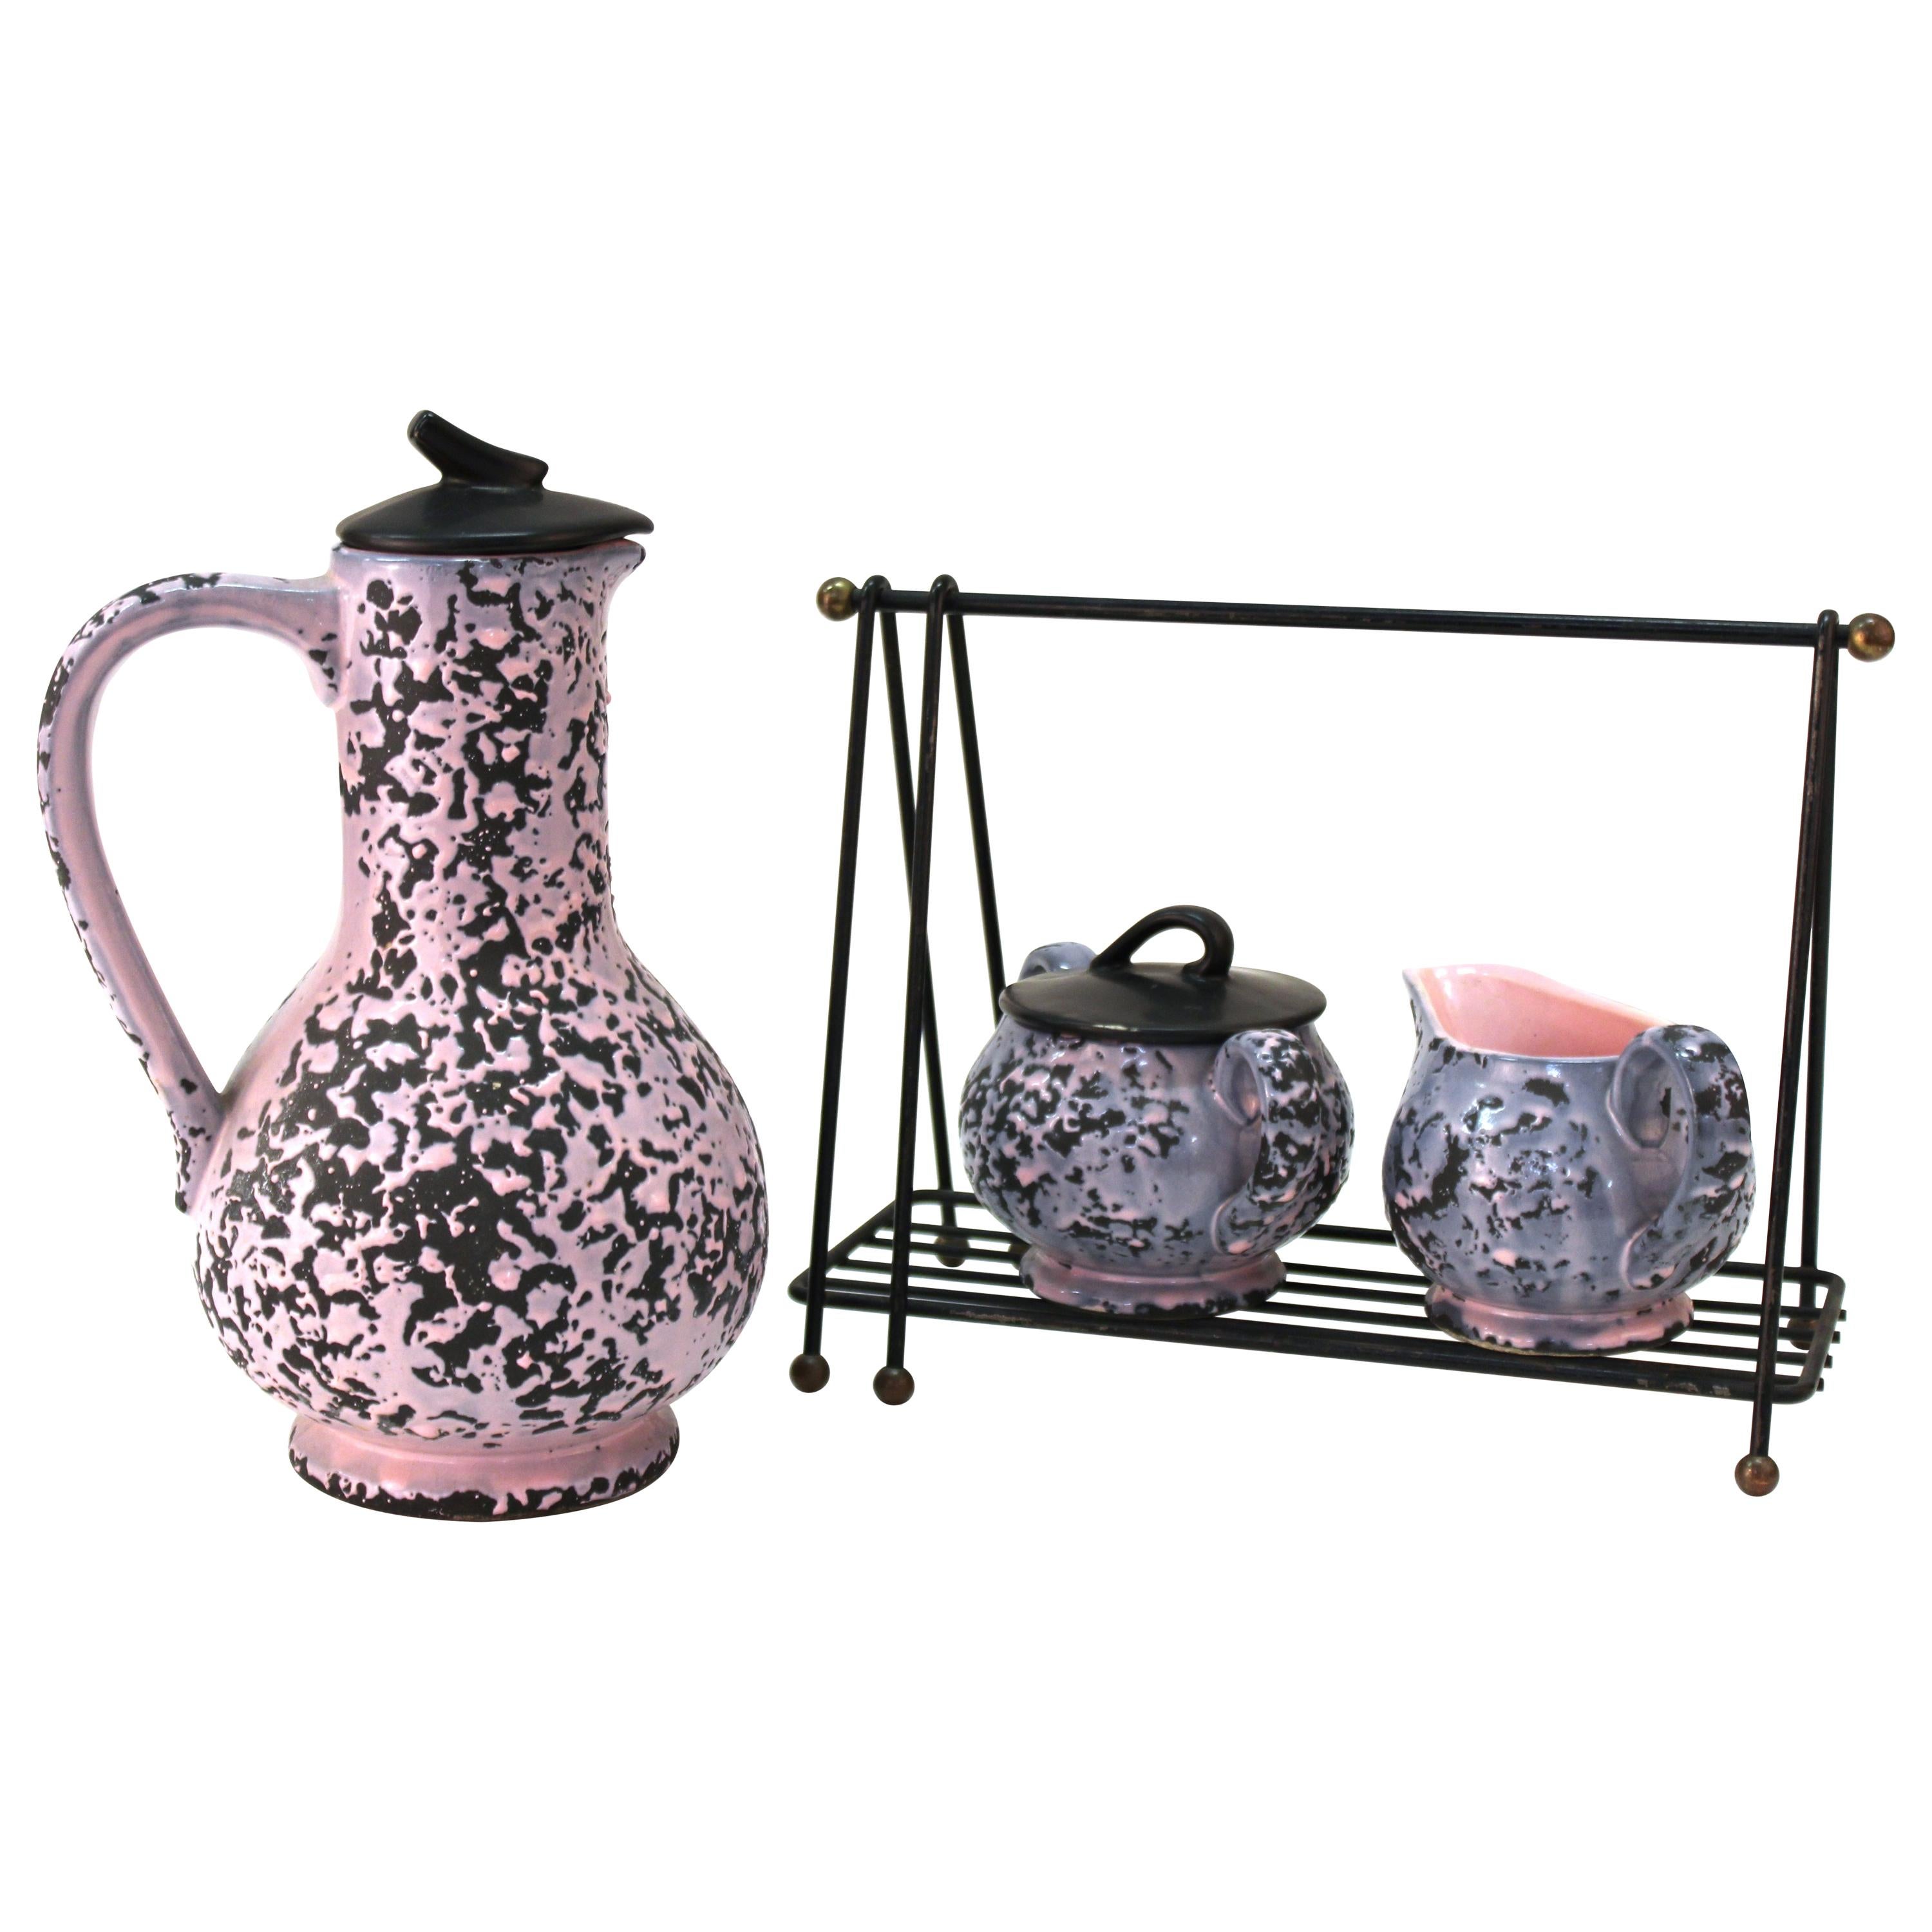 https://a.1stdibscdn.com/mccoy-mid-century-modern-ceramic-tea-or-coffee-set-for-sale/1121189/f_124116011540272204091/12411601_master.jpg